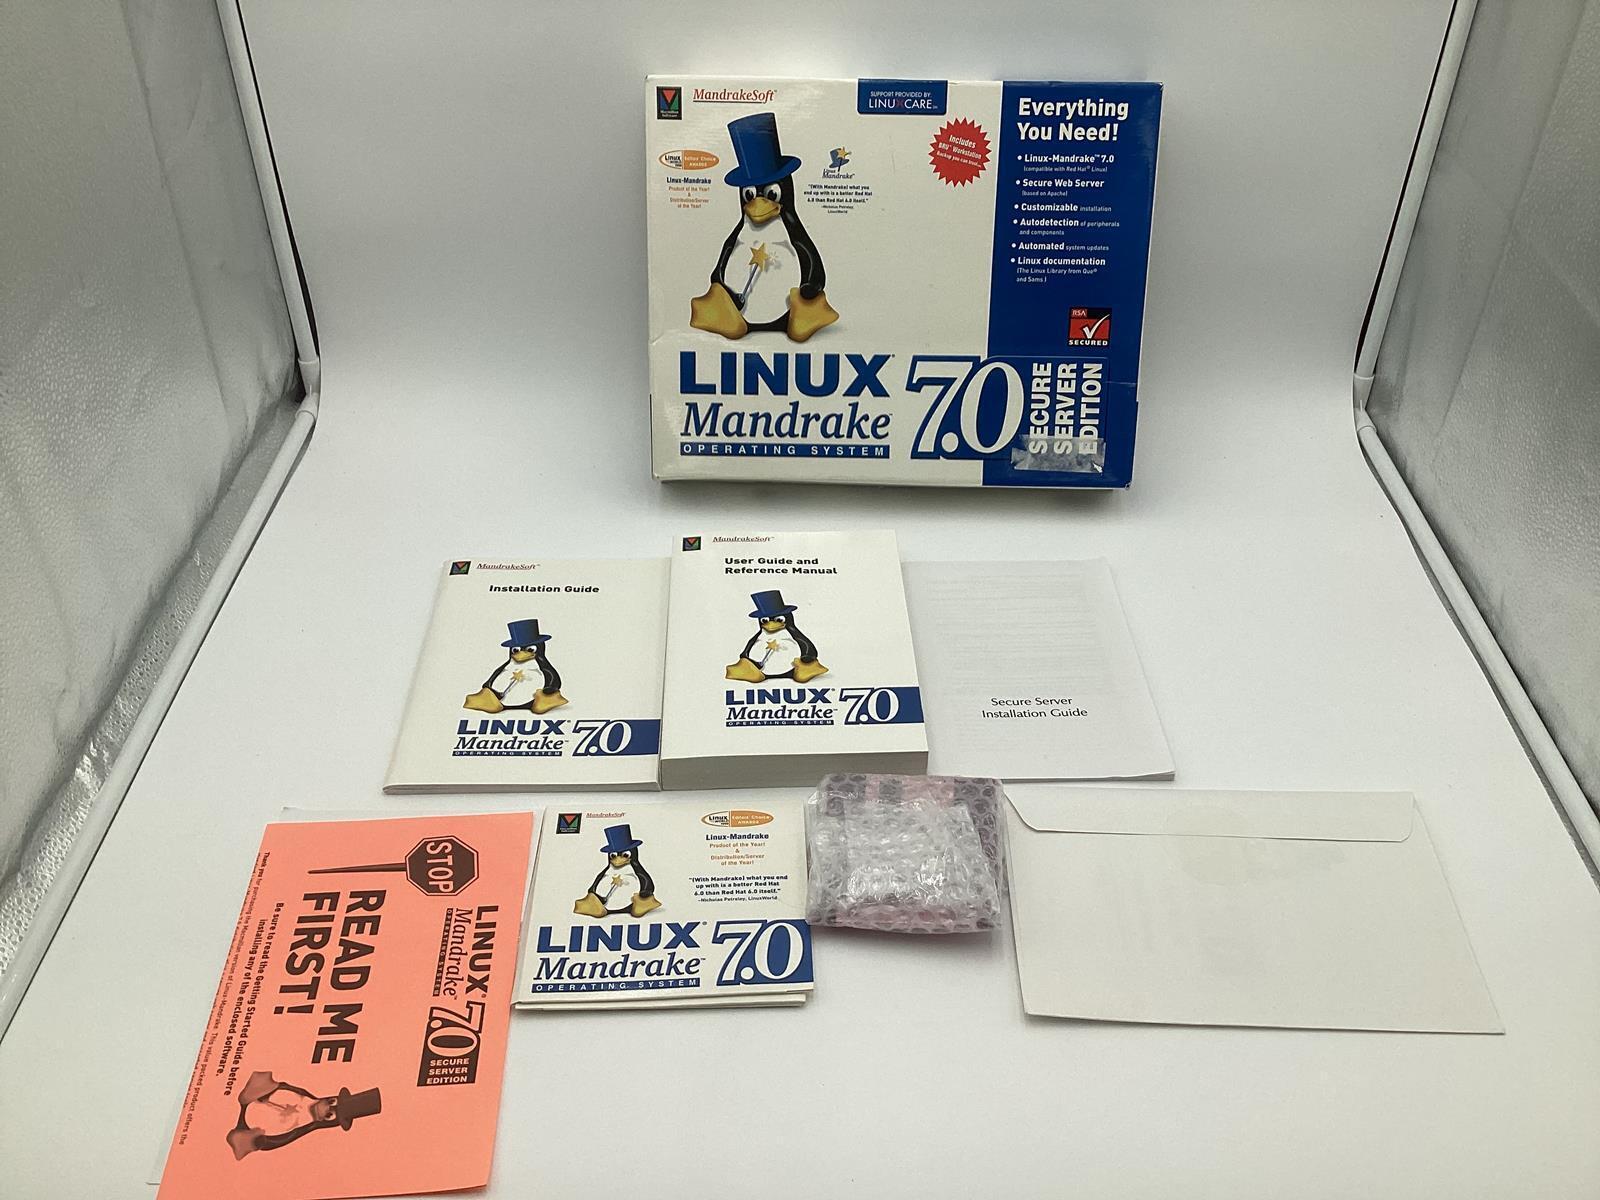 Linux Mandrake Operating System 7.0 Secure Server Edition